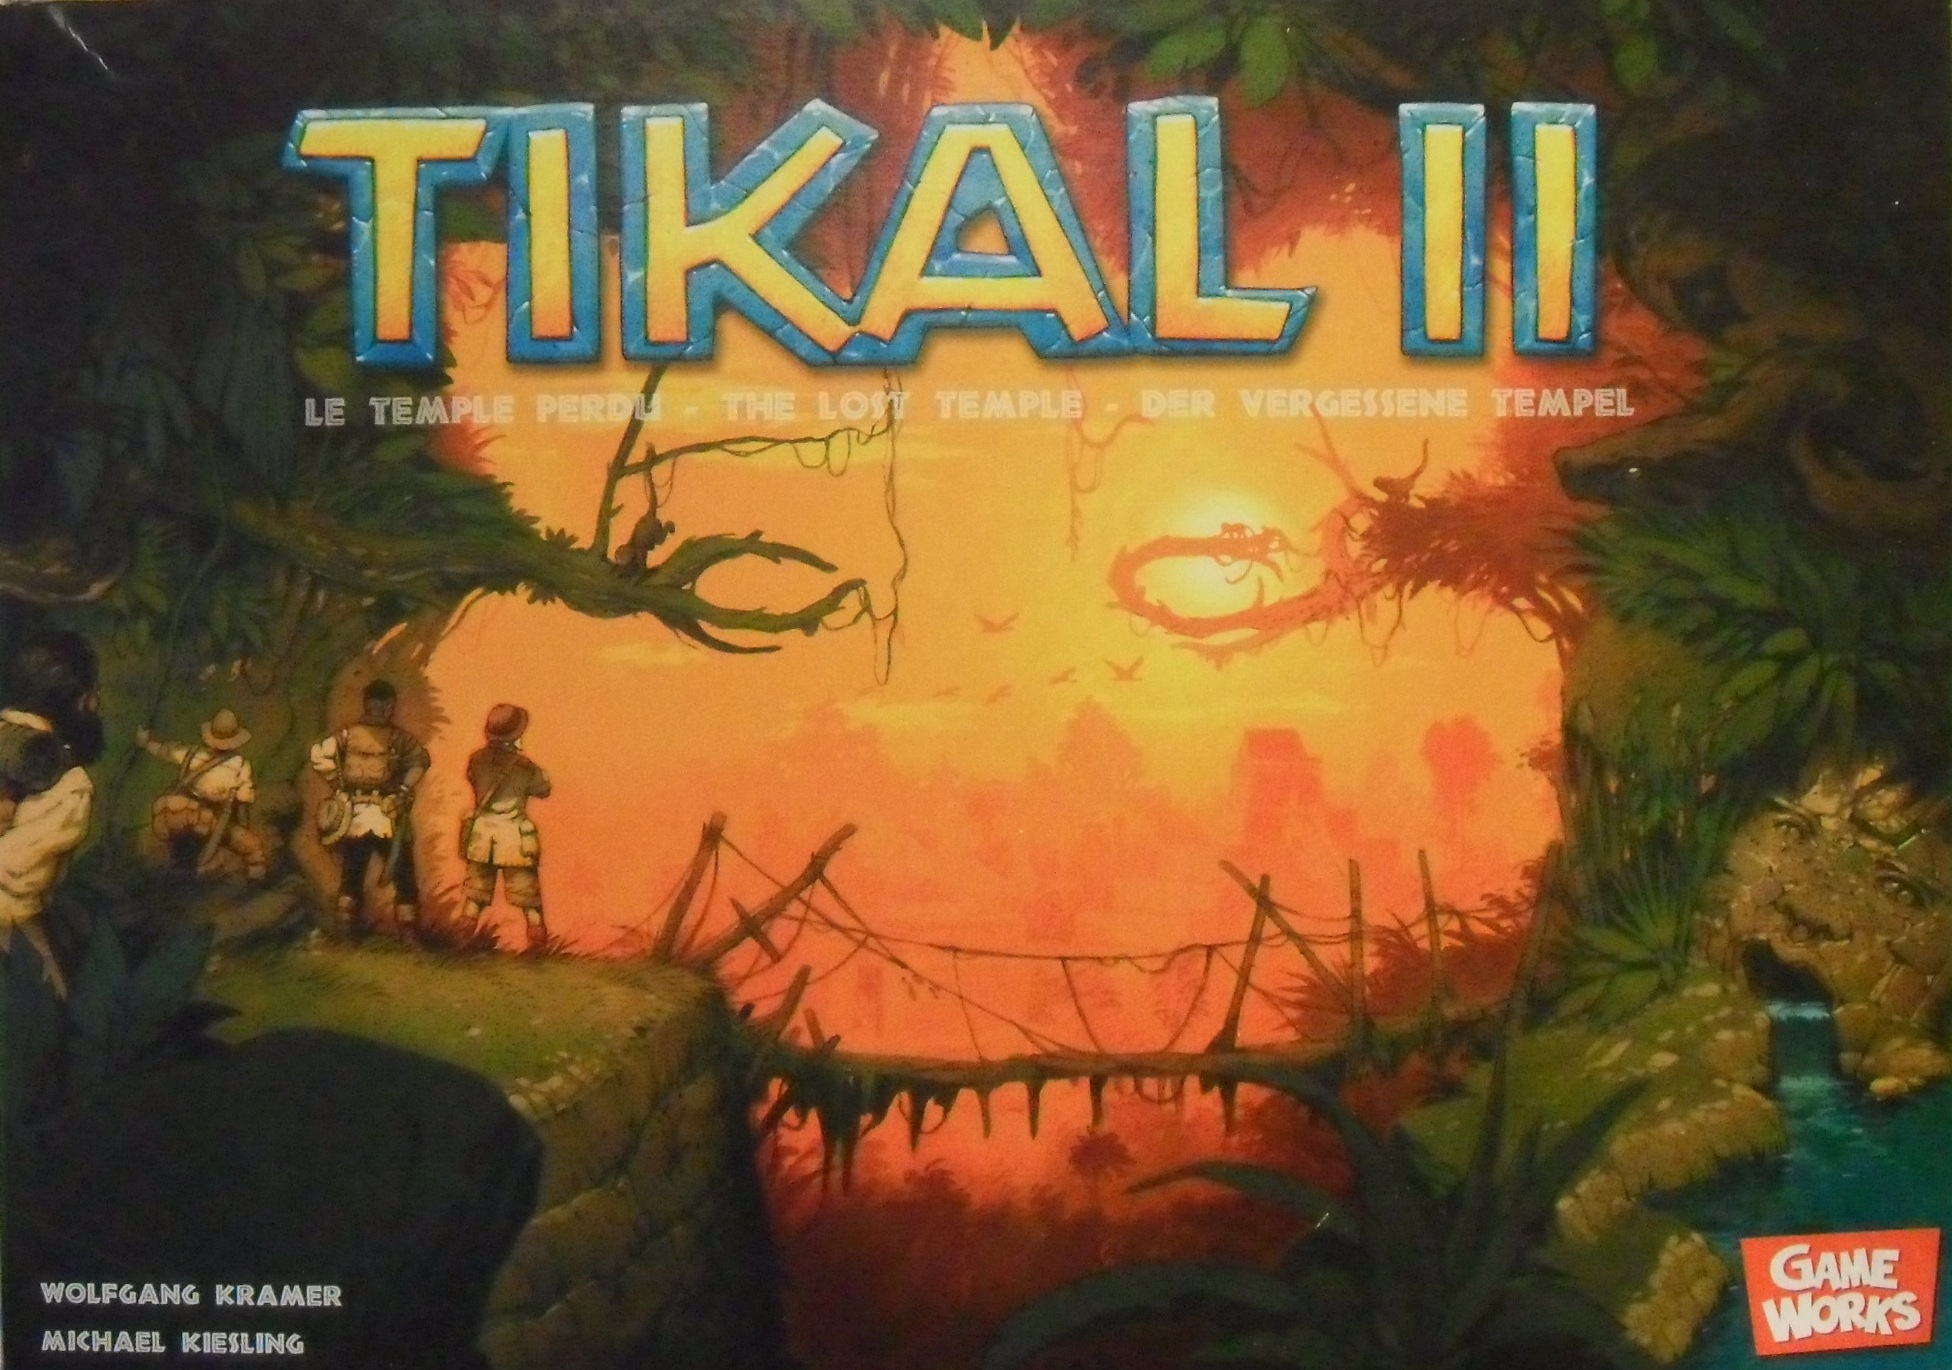 Tikal II: Le Temple Perdu (The Lost Temple, Der Vergessene Tempel)